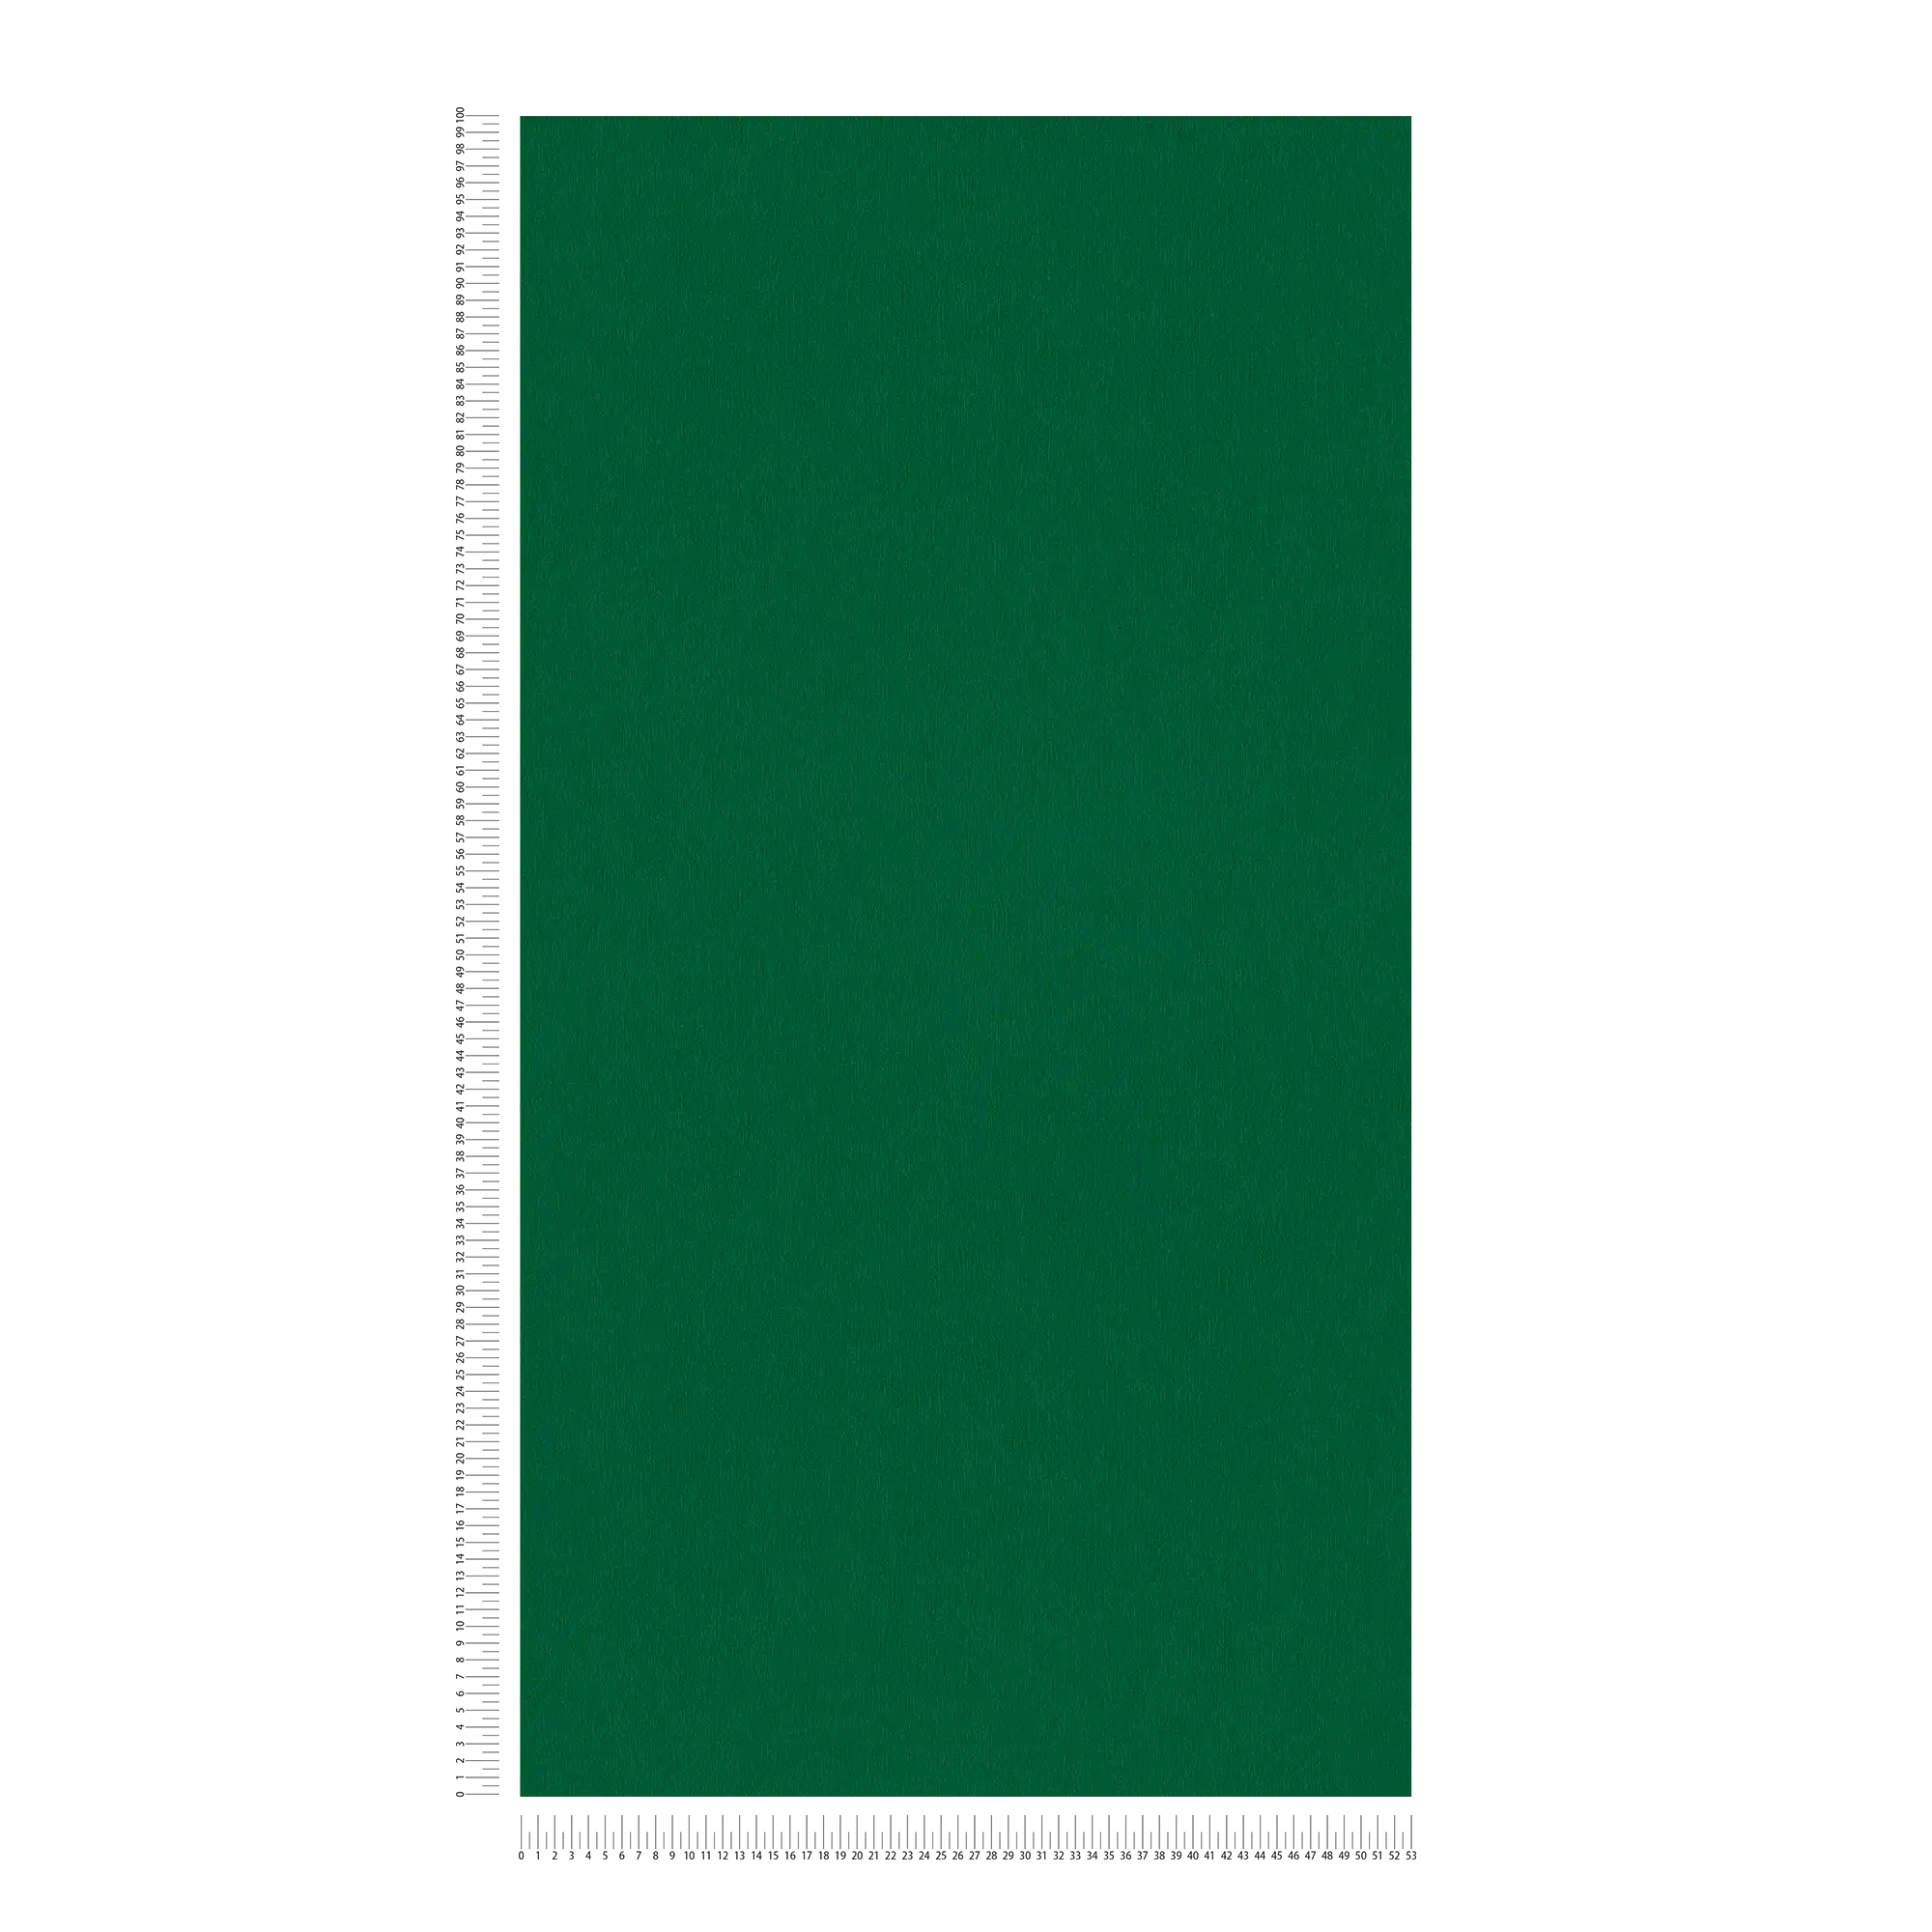             Carta da parati verde scuro, liscia e satinata - verde
        